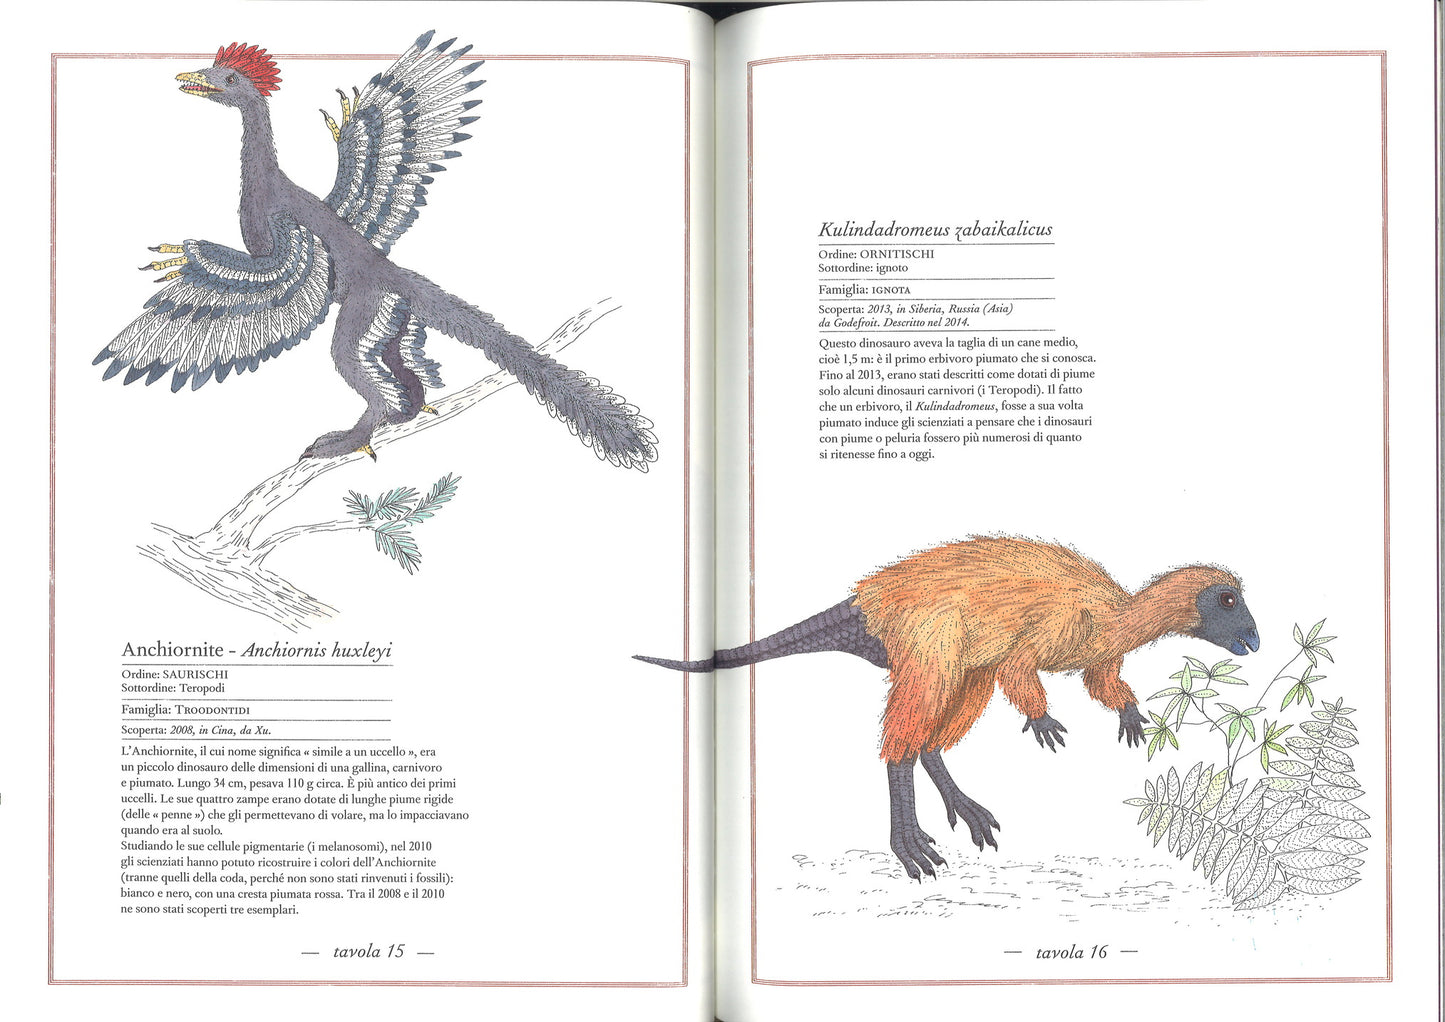 Inventario illustrato dei dinosauri